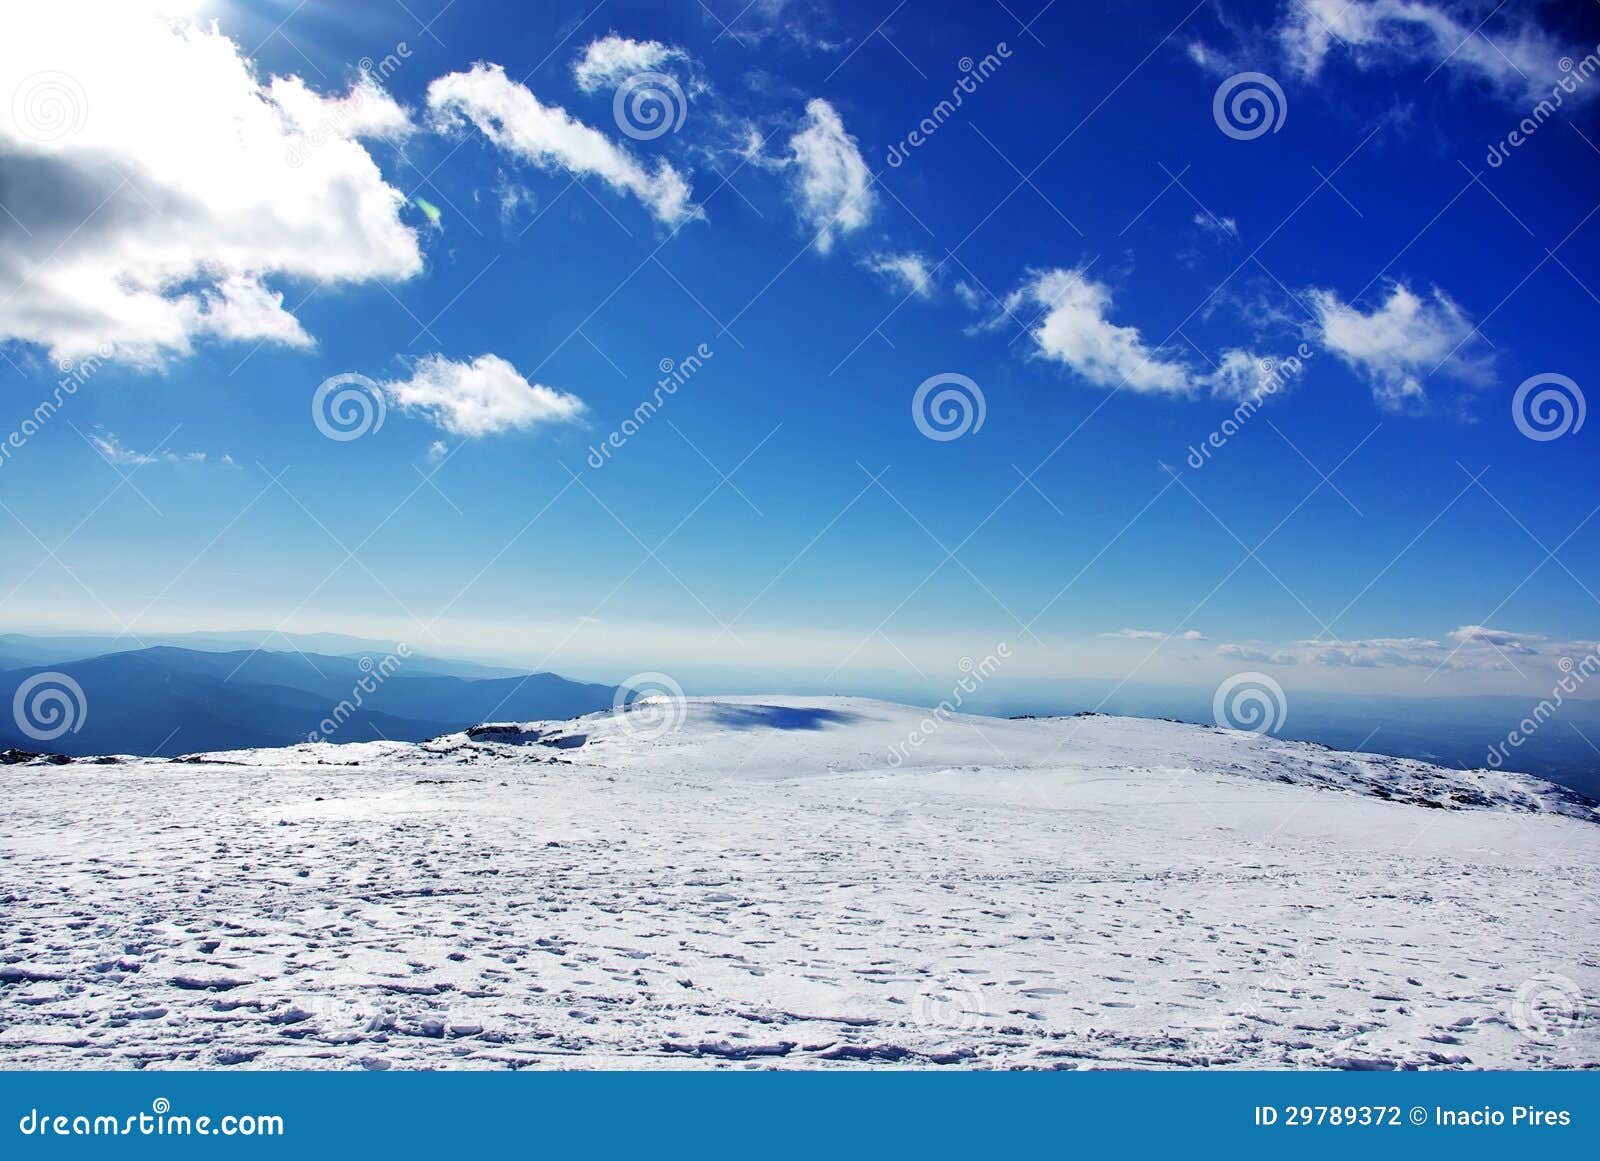 landscape of estrela mountain